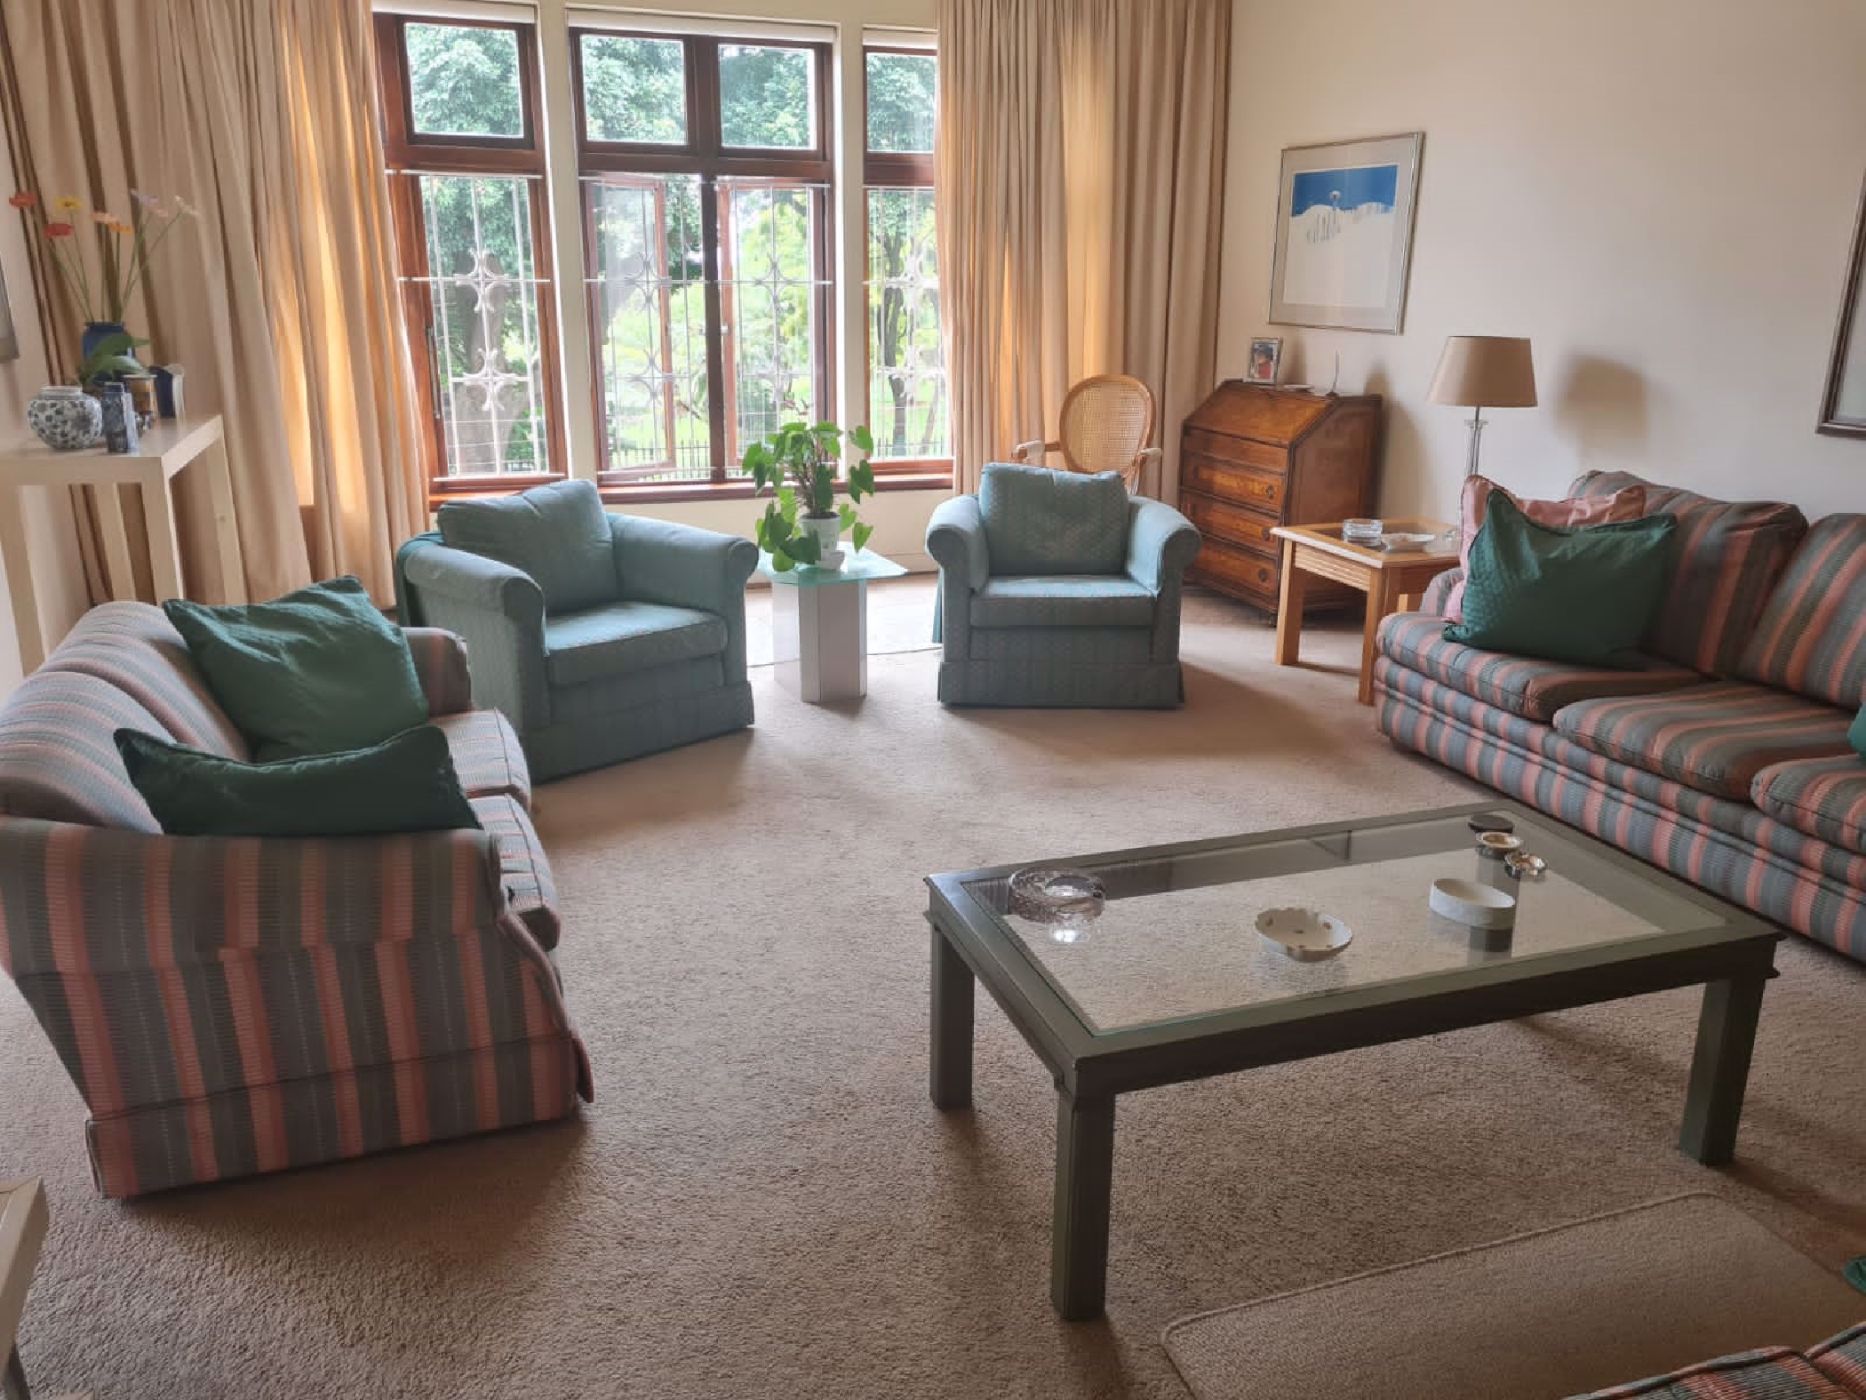 3 bedroom apartment for sale in Glenwood (Durban)